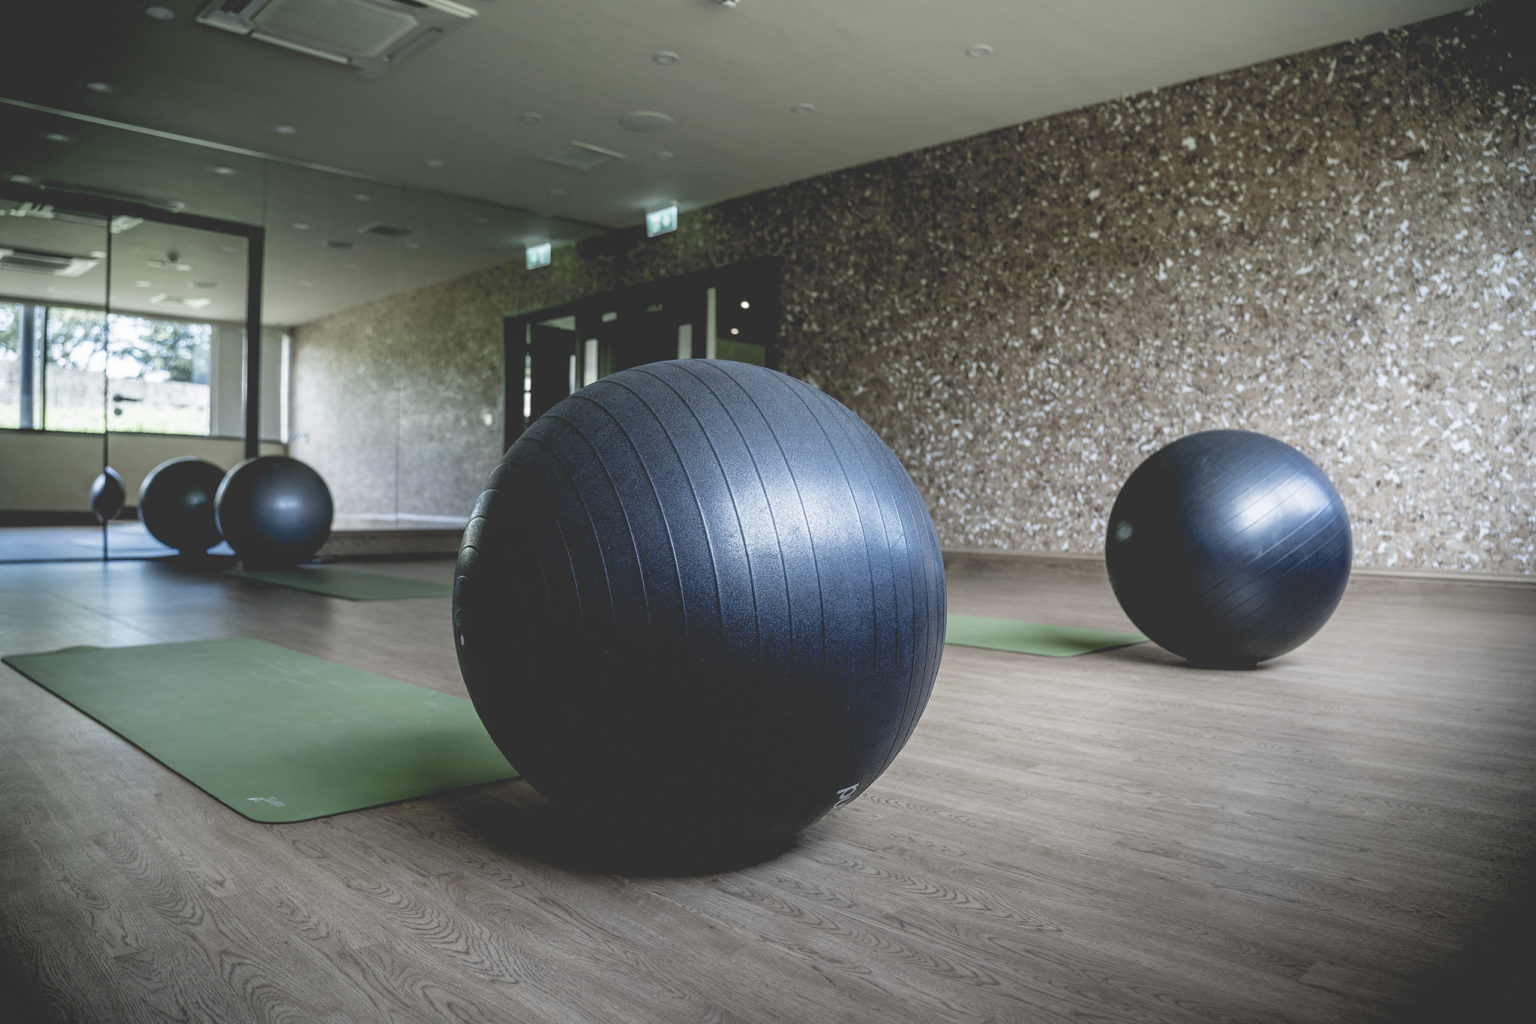 Gym exercise balls